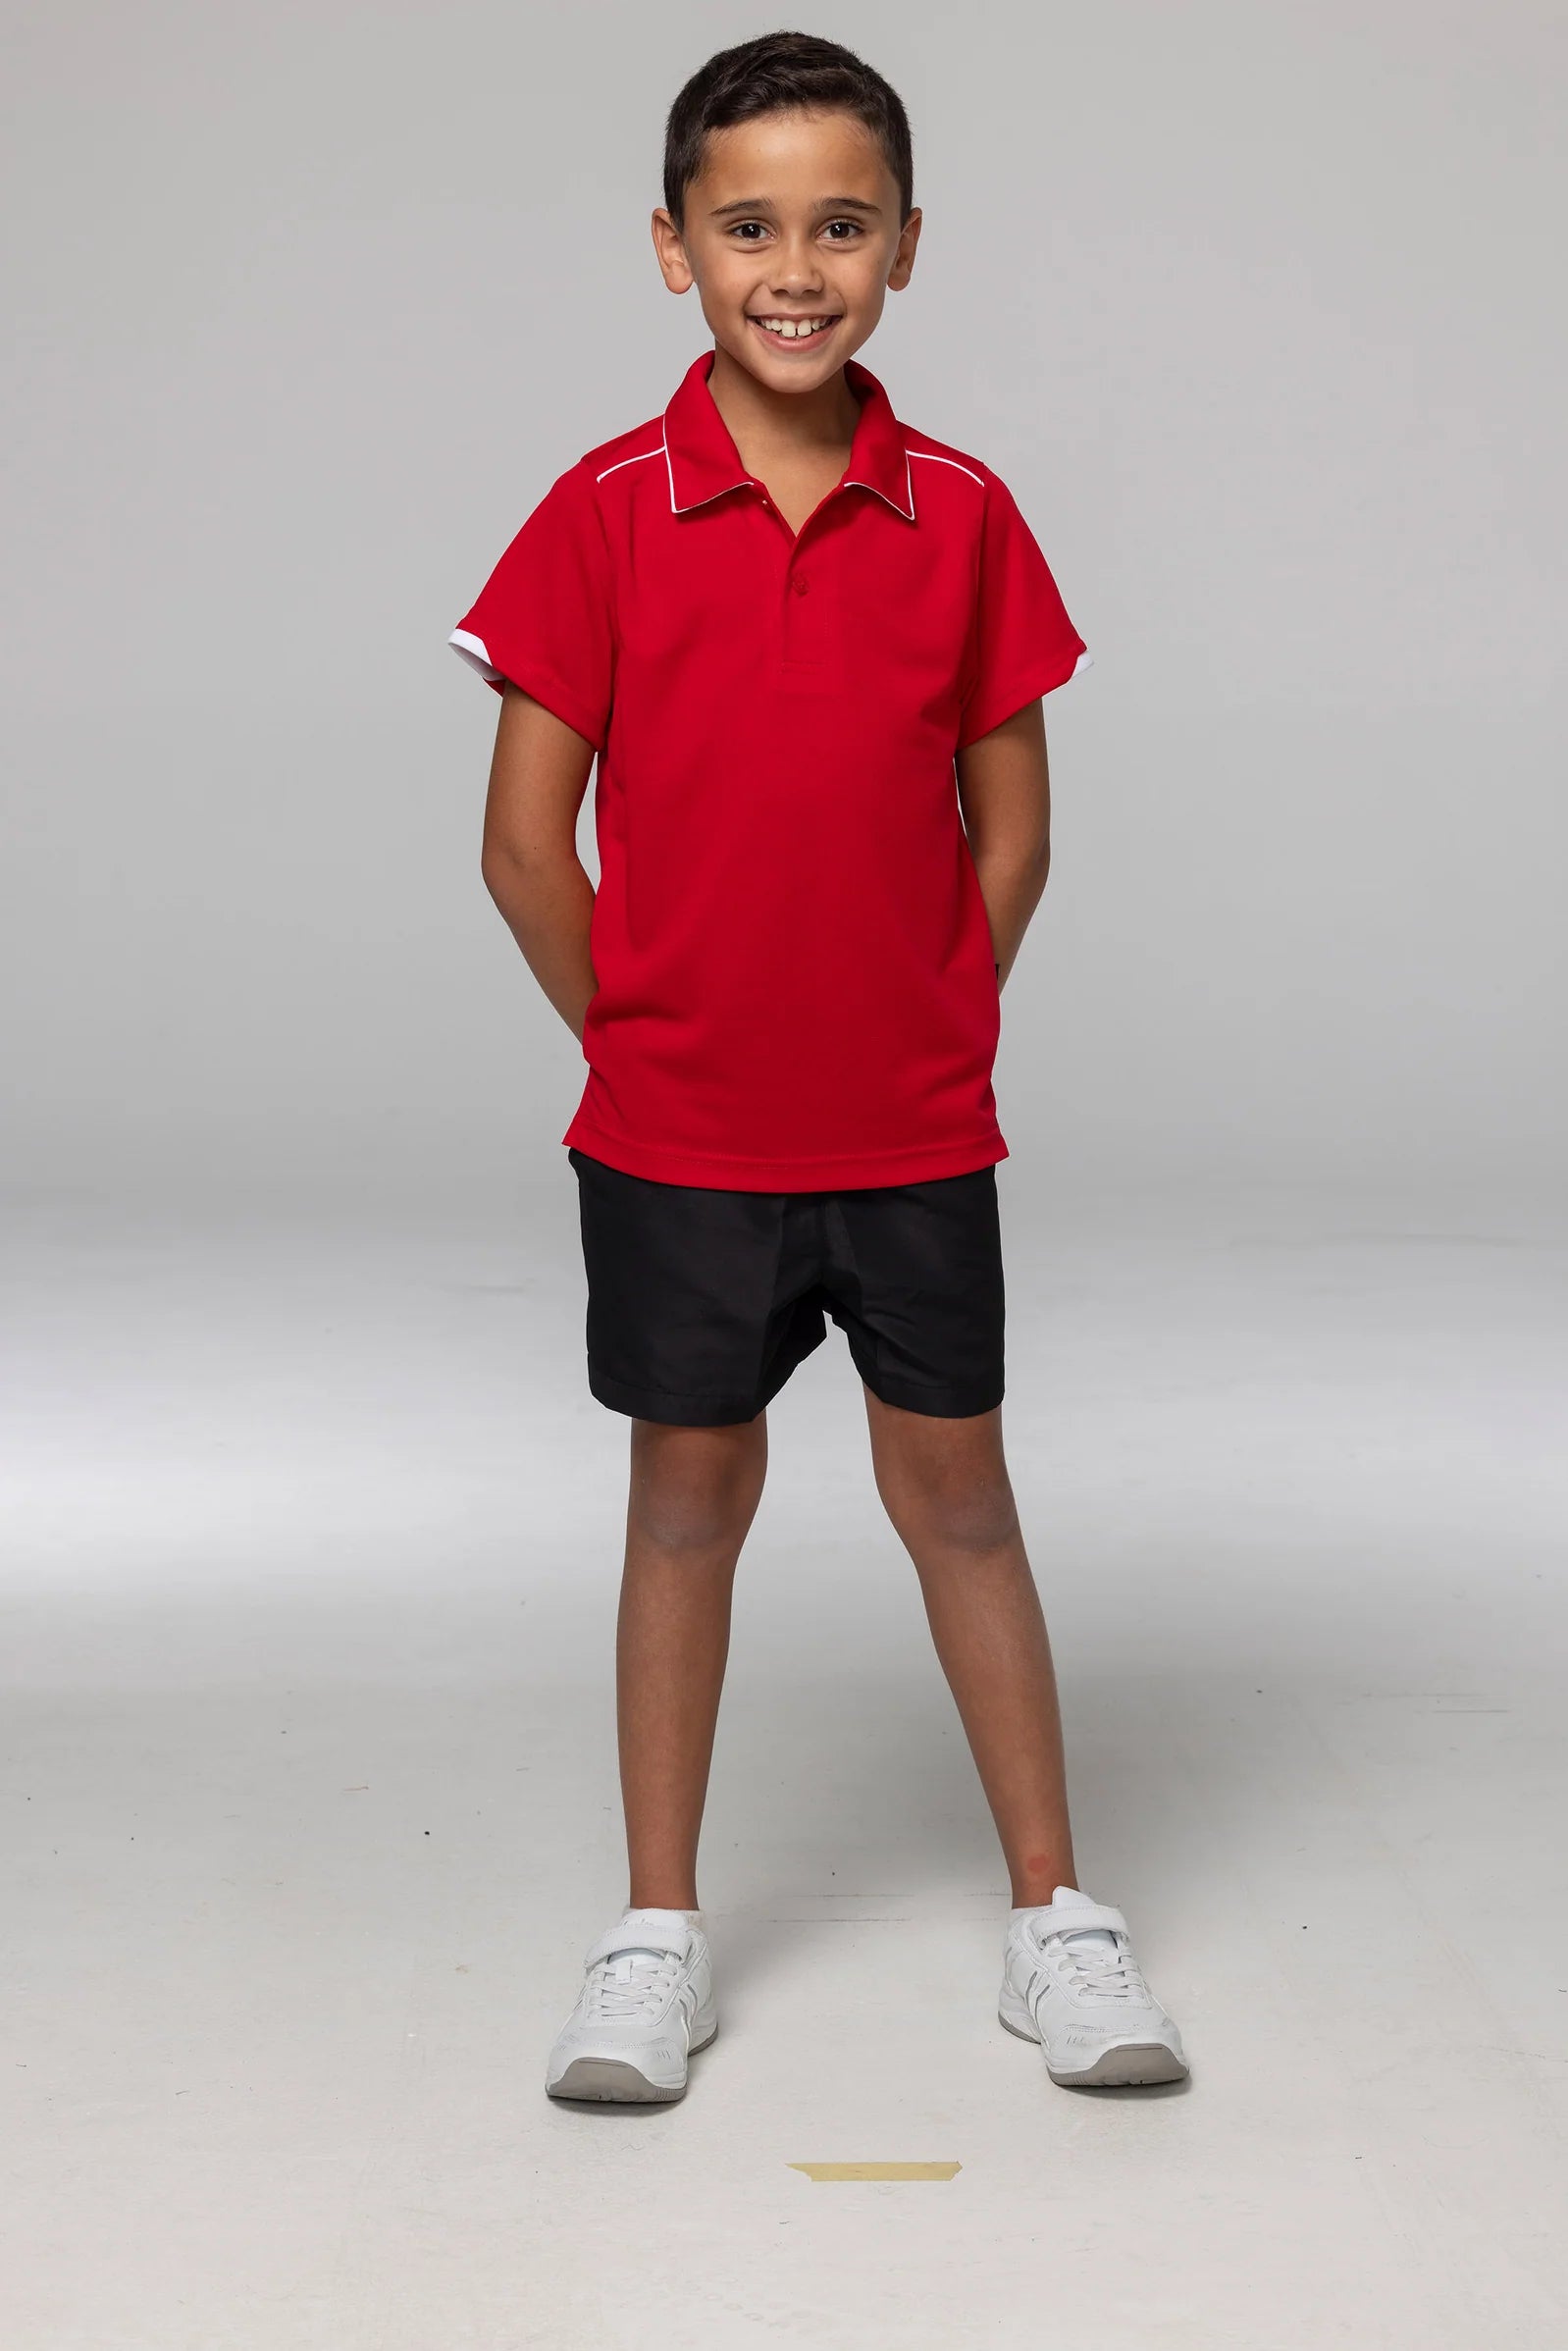 Custom Currumbin Kids Polo Shirts | Custom Printed Workwear Australia